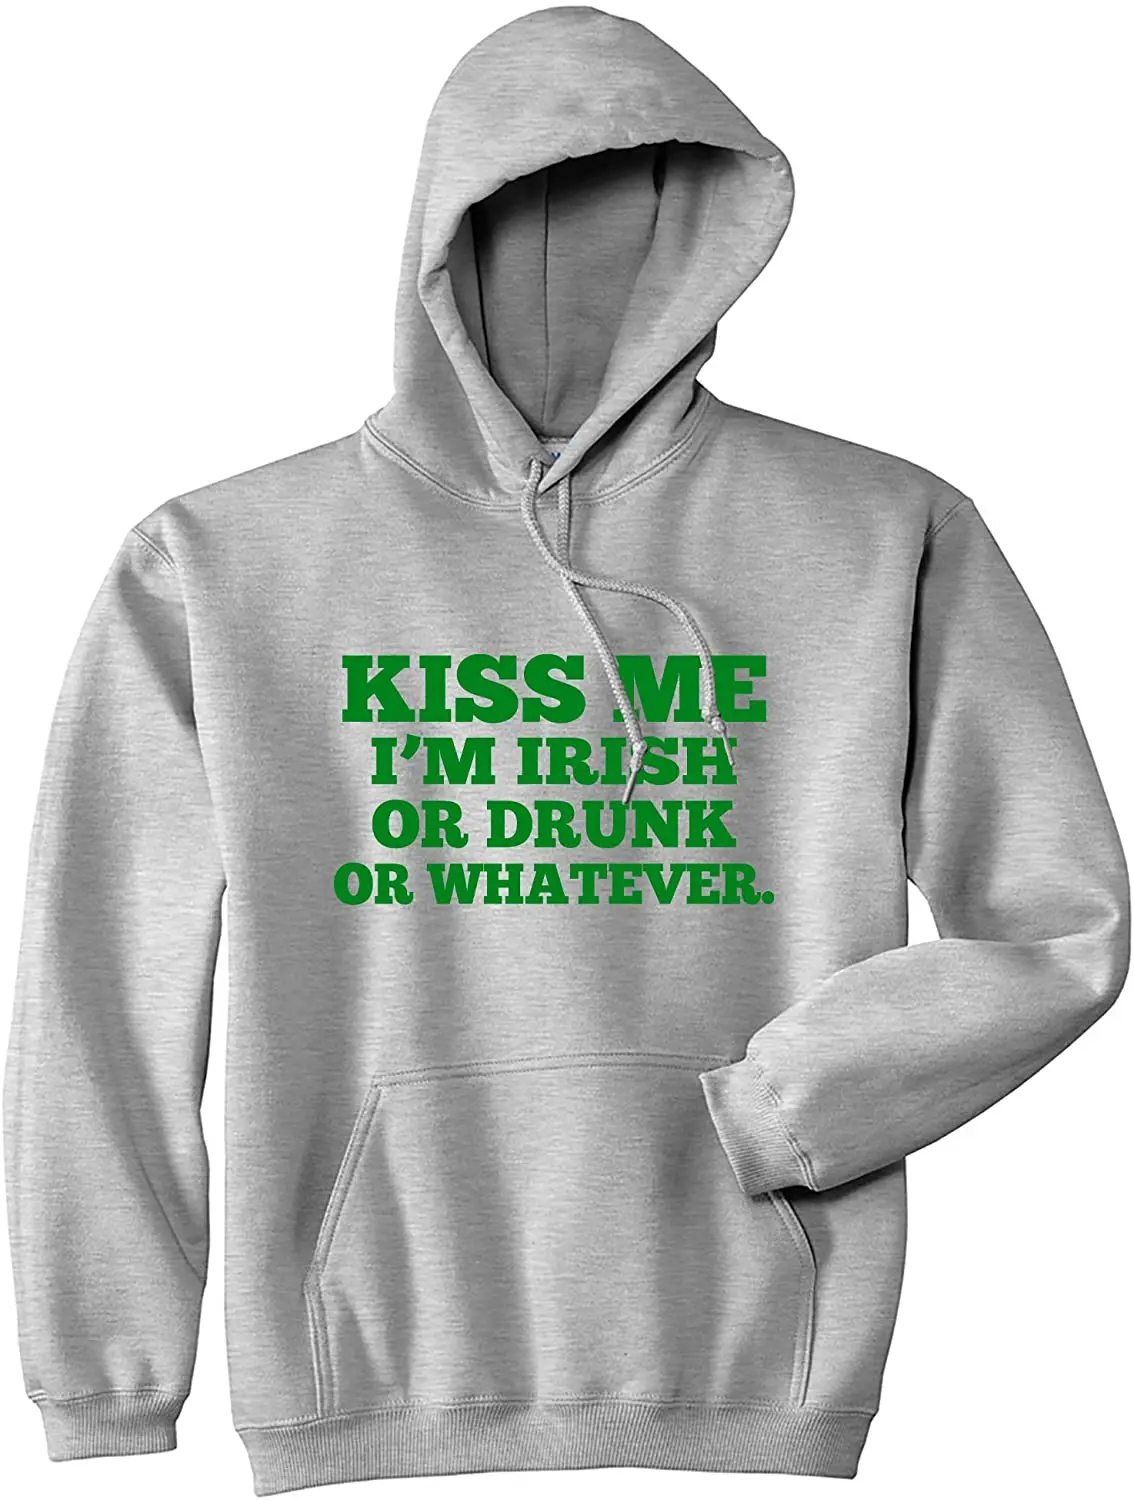 

Kiss Me Im Irish or Drunk or Whatever Hoodie Saint Patricks Day Shirt Man Autumn Fleece Hoody Clothes Fashion Swetshirt